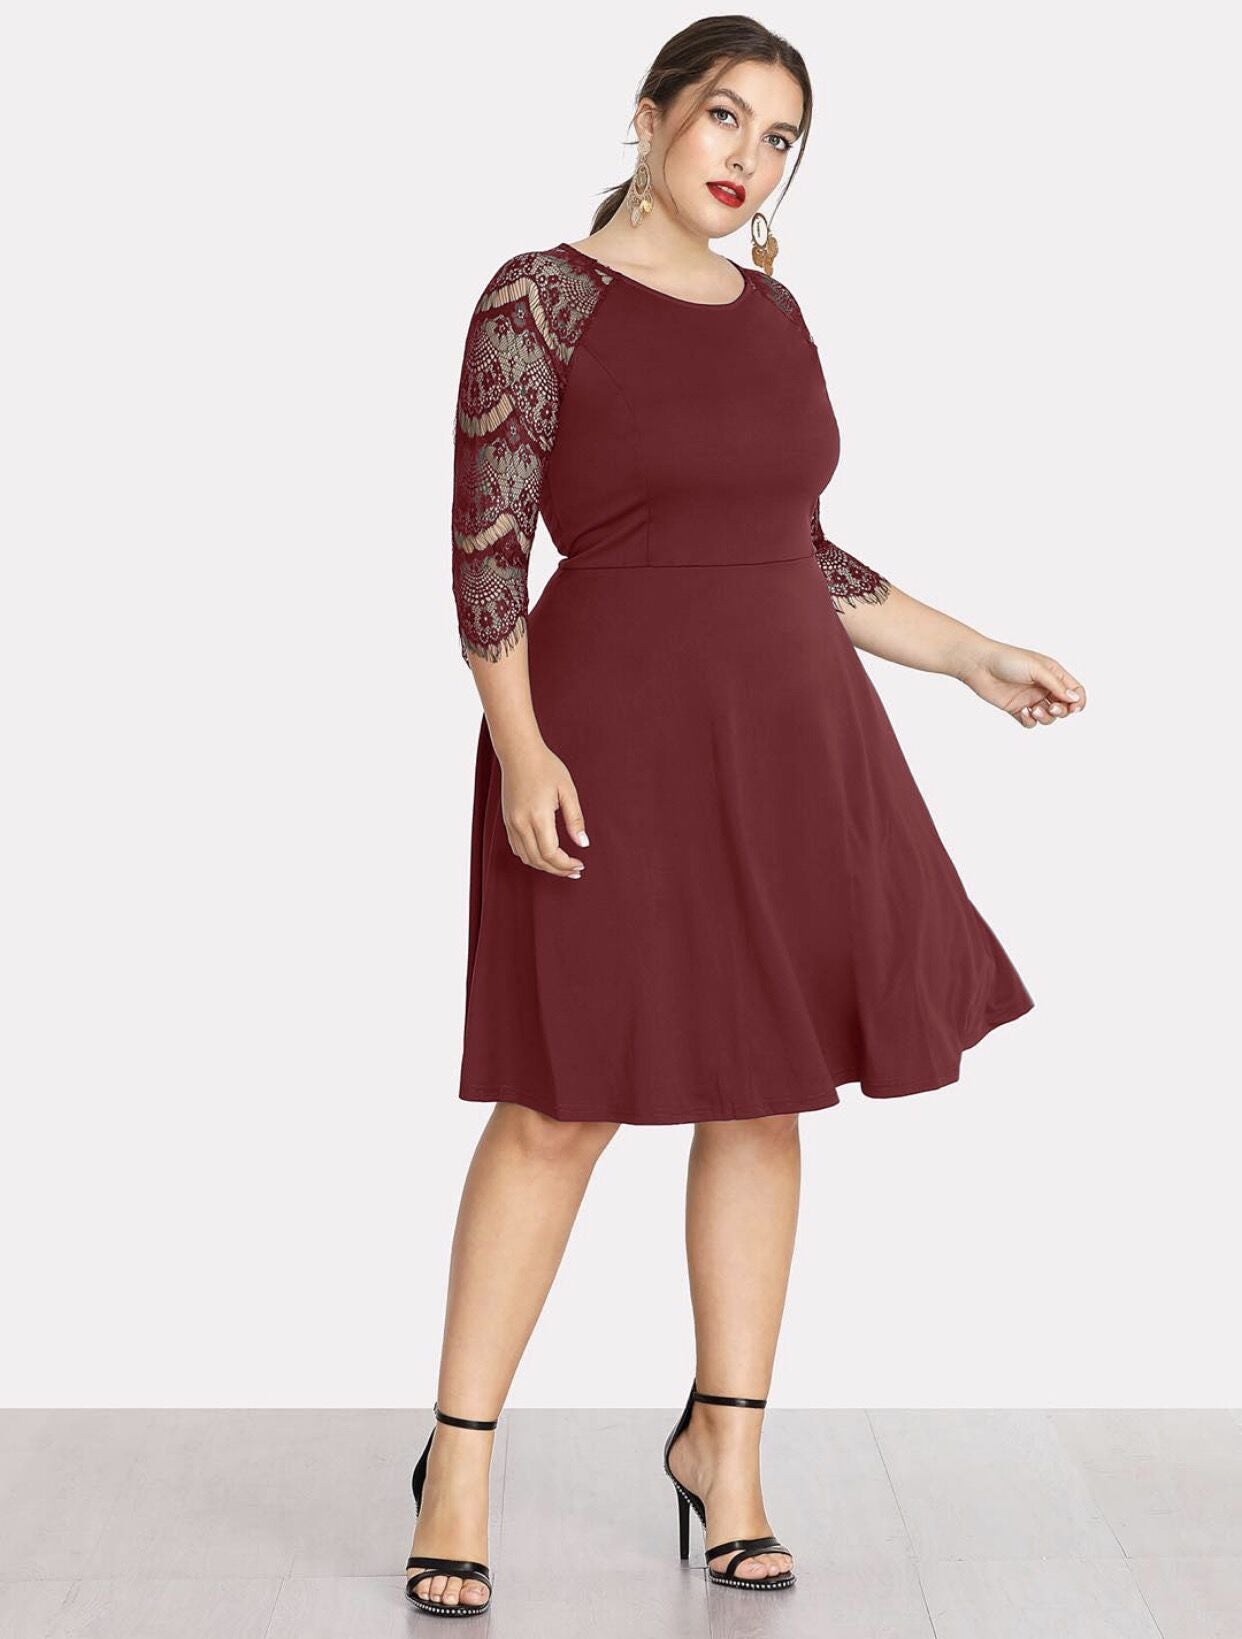 Lace Sleeve Plus Size Dress